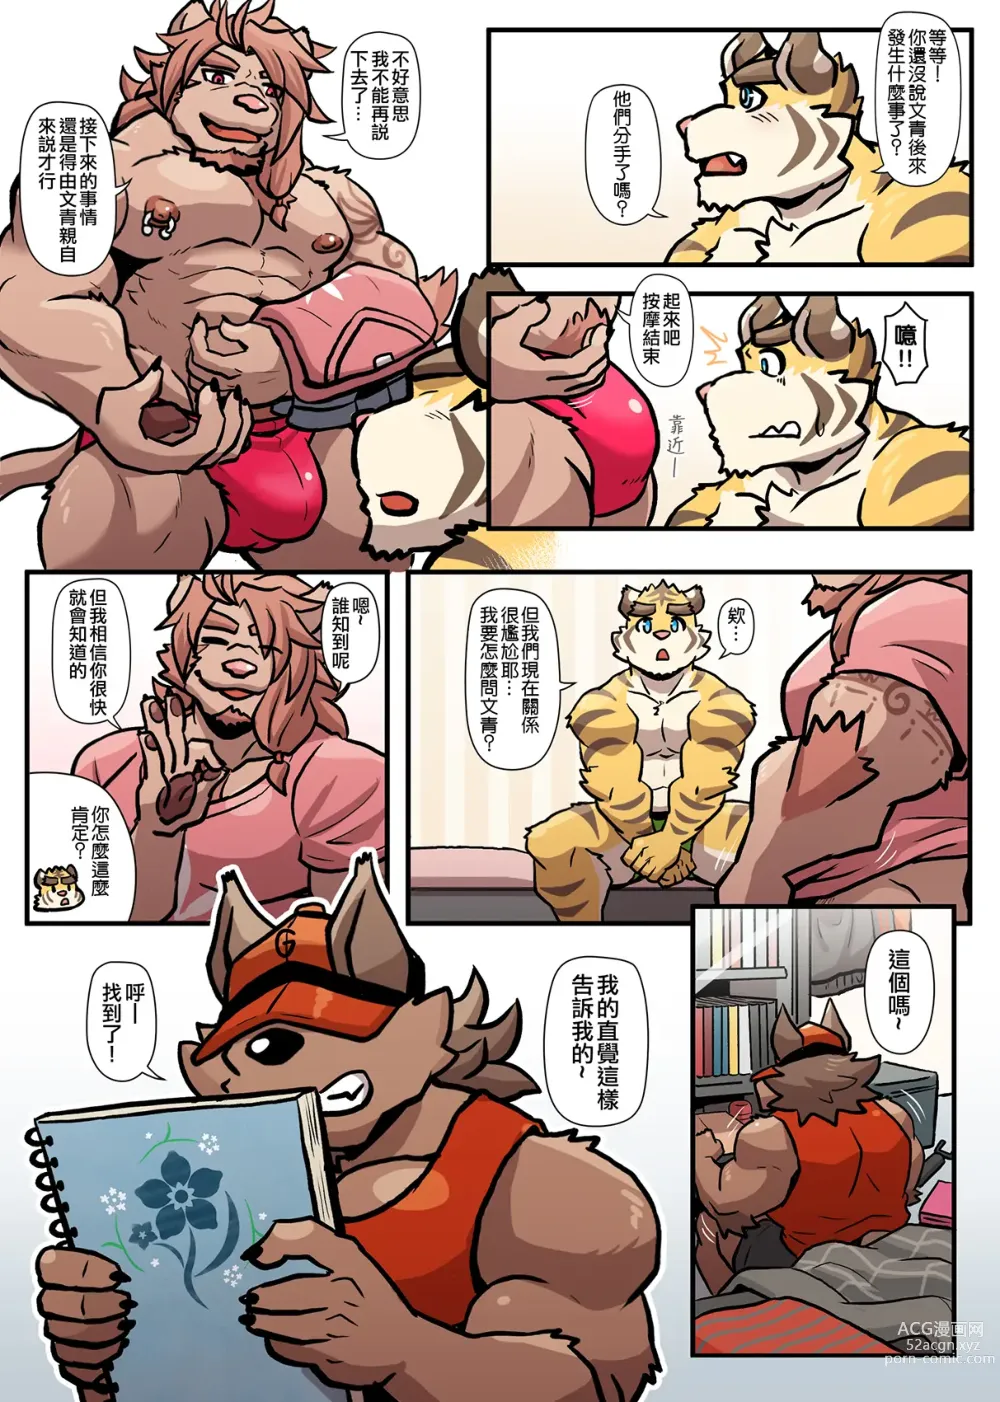 Page 161 of doujinshi Gym Pals